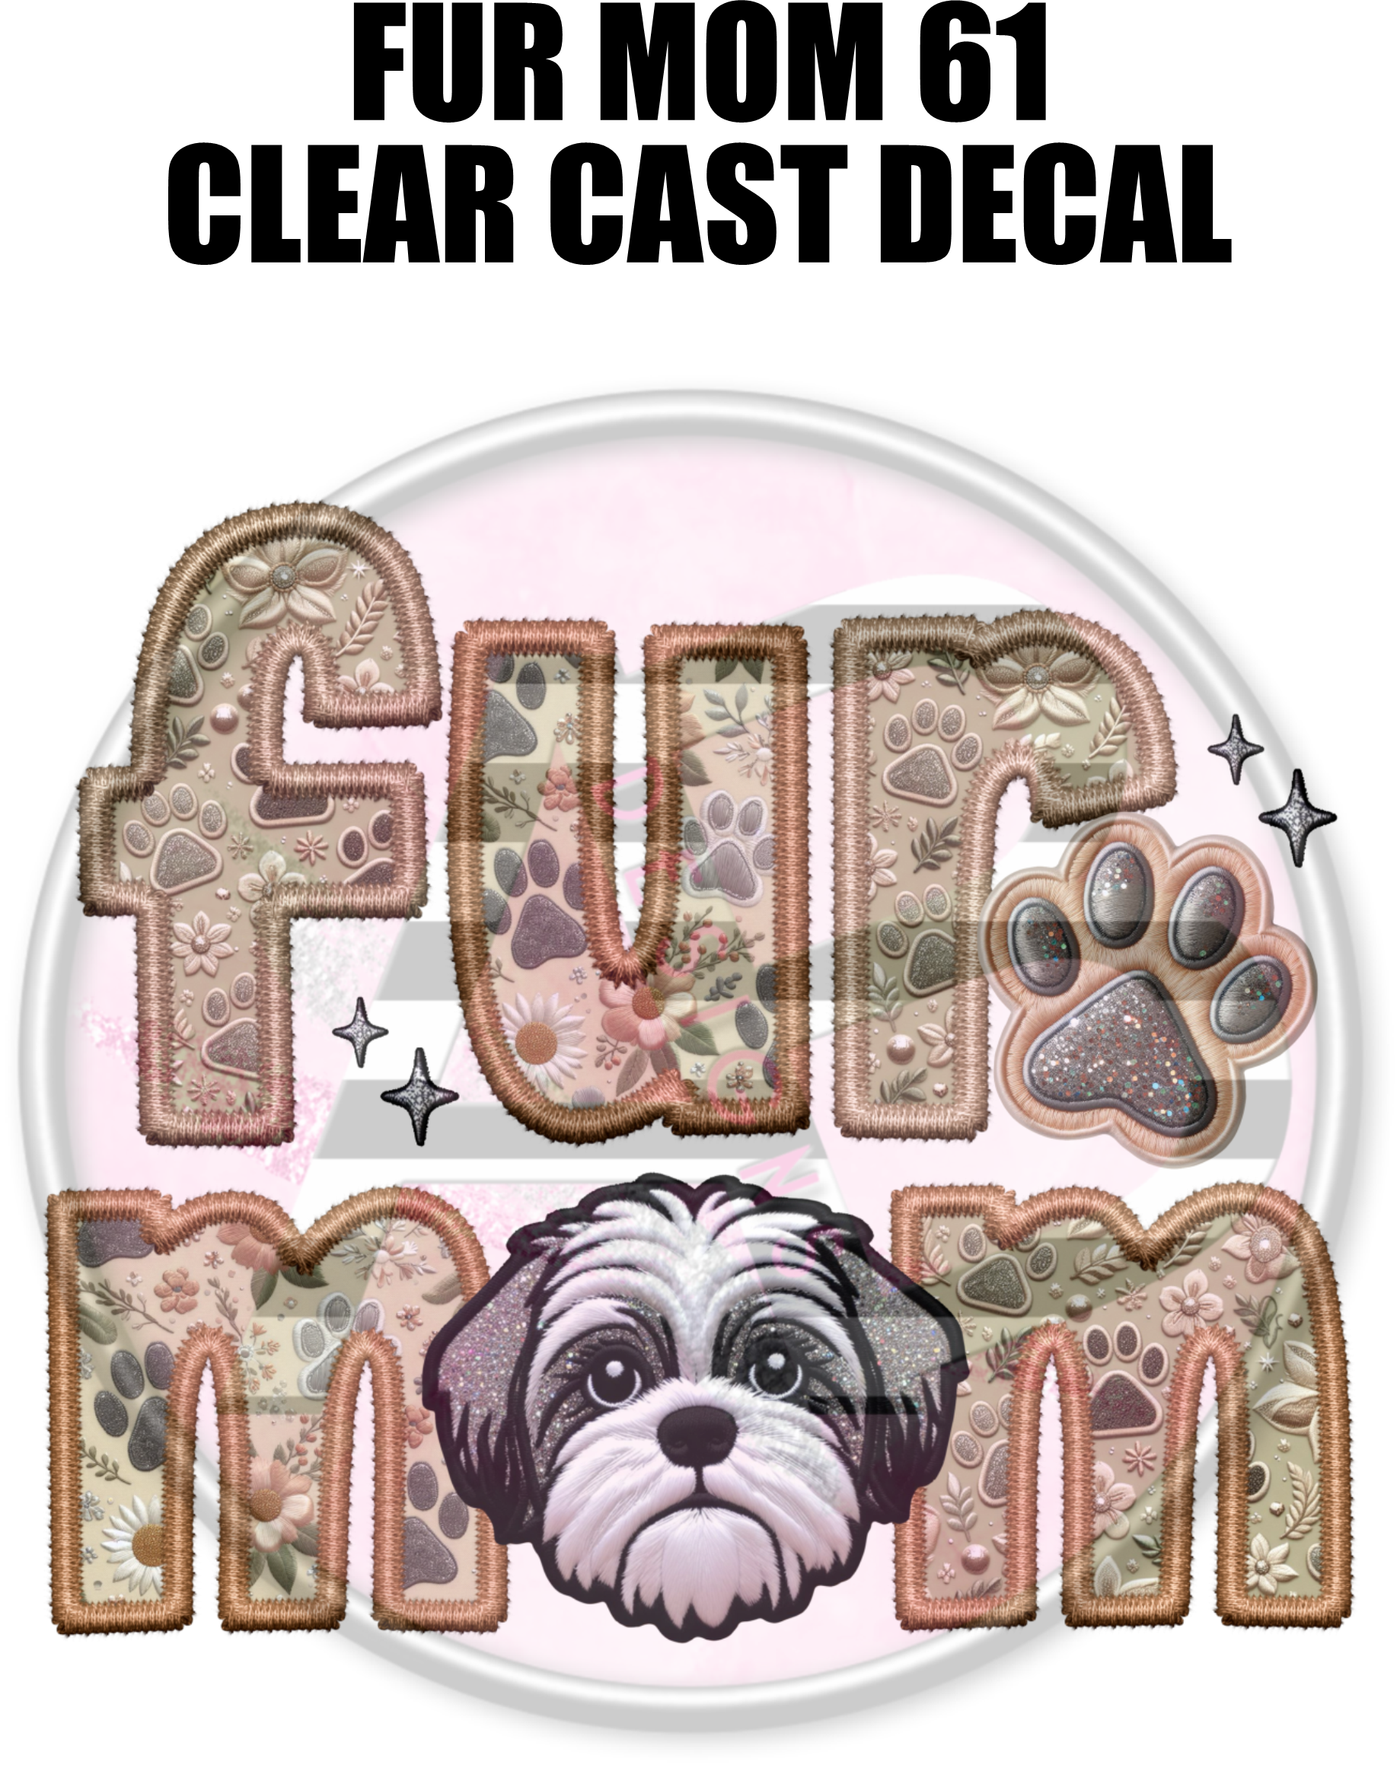 Fur Mom 61 - Clear Cast Decal